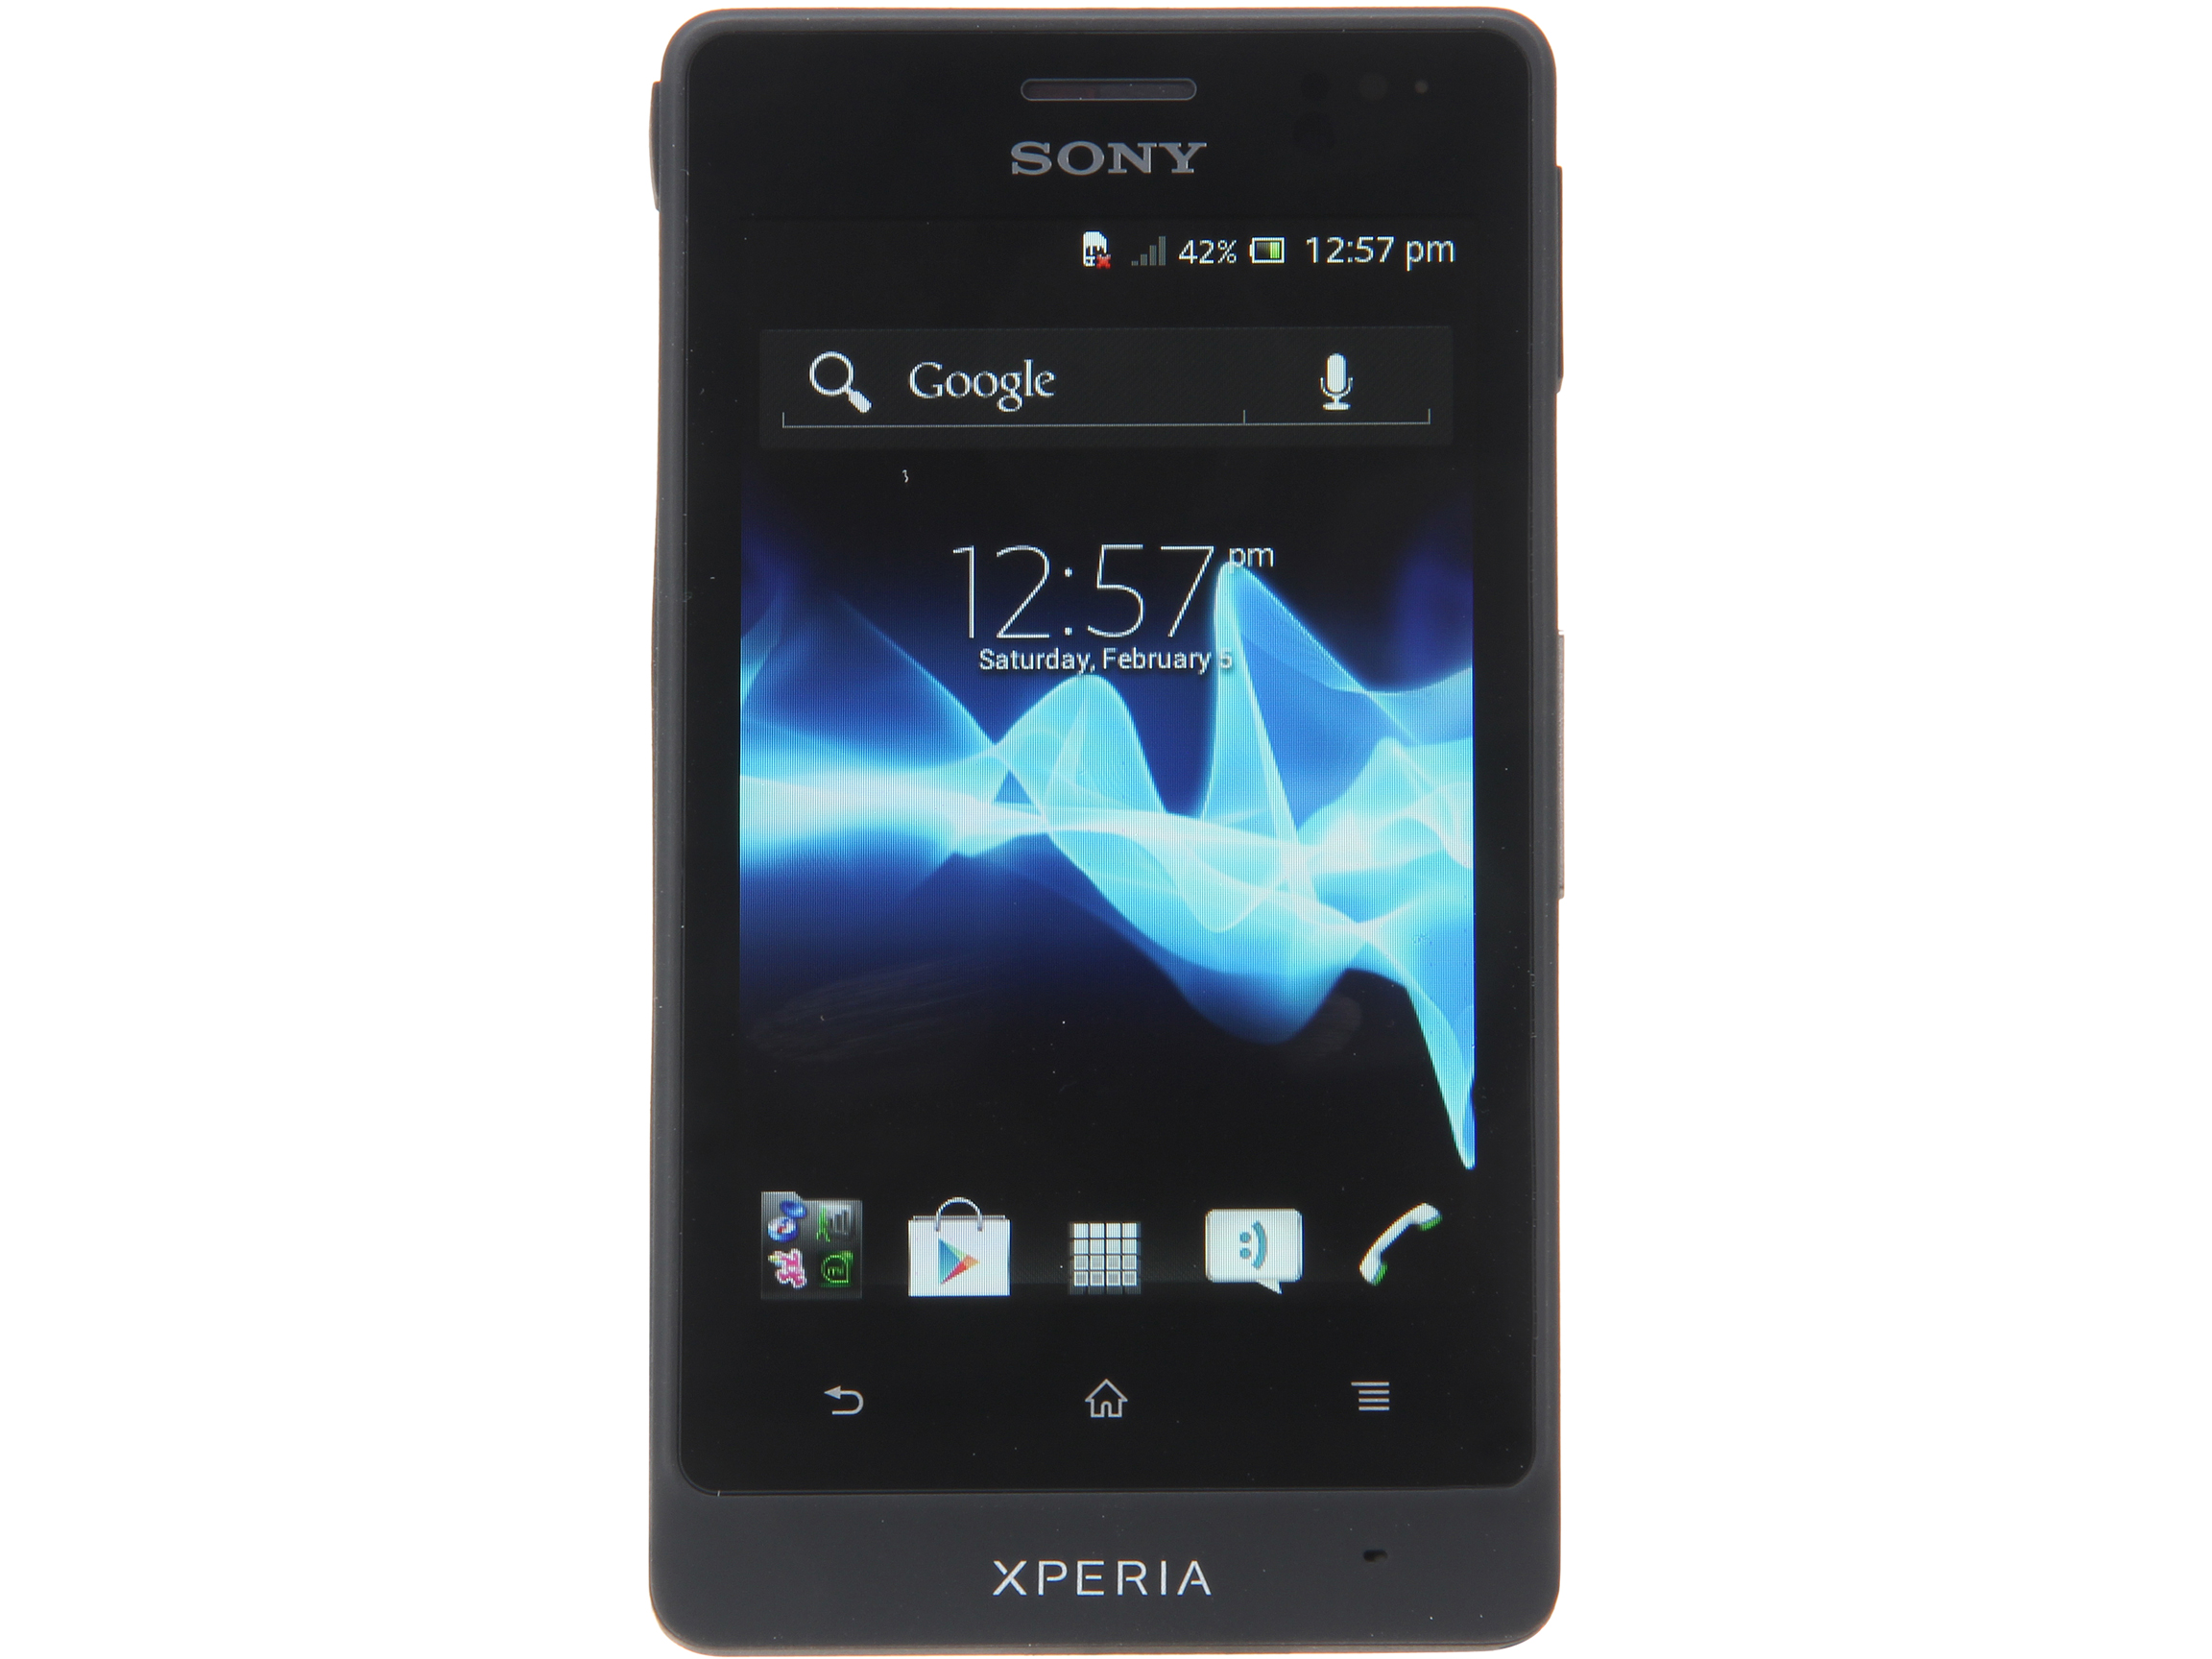 Sony Xperia advance ST27a Black 3G Unlocked Cell Phone